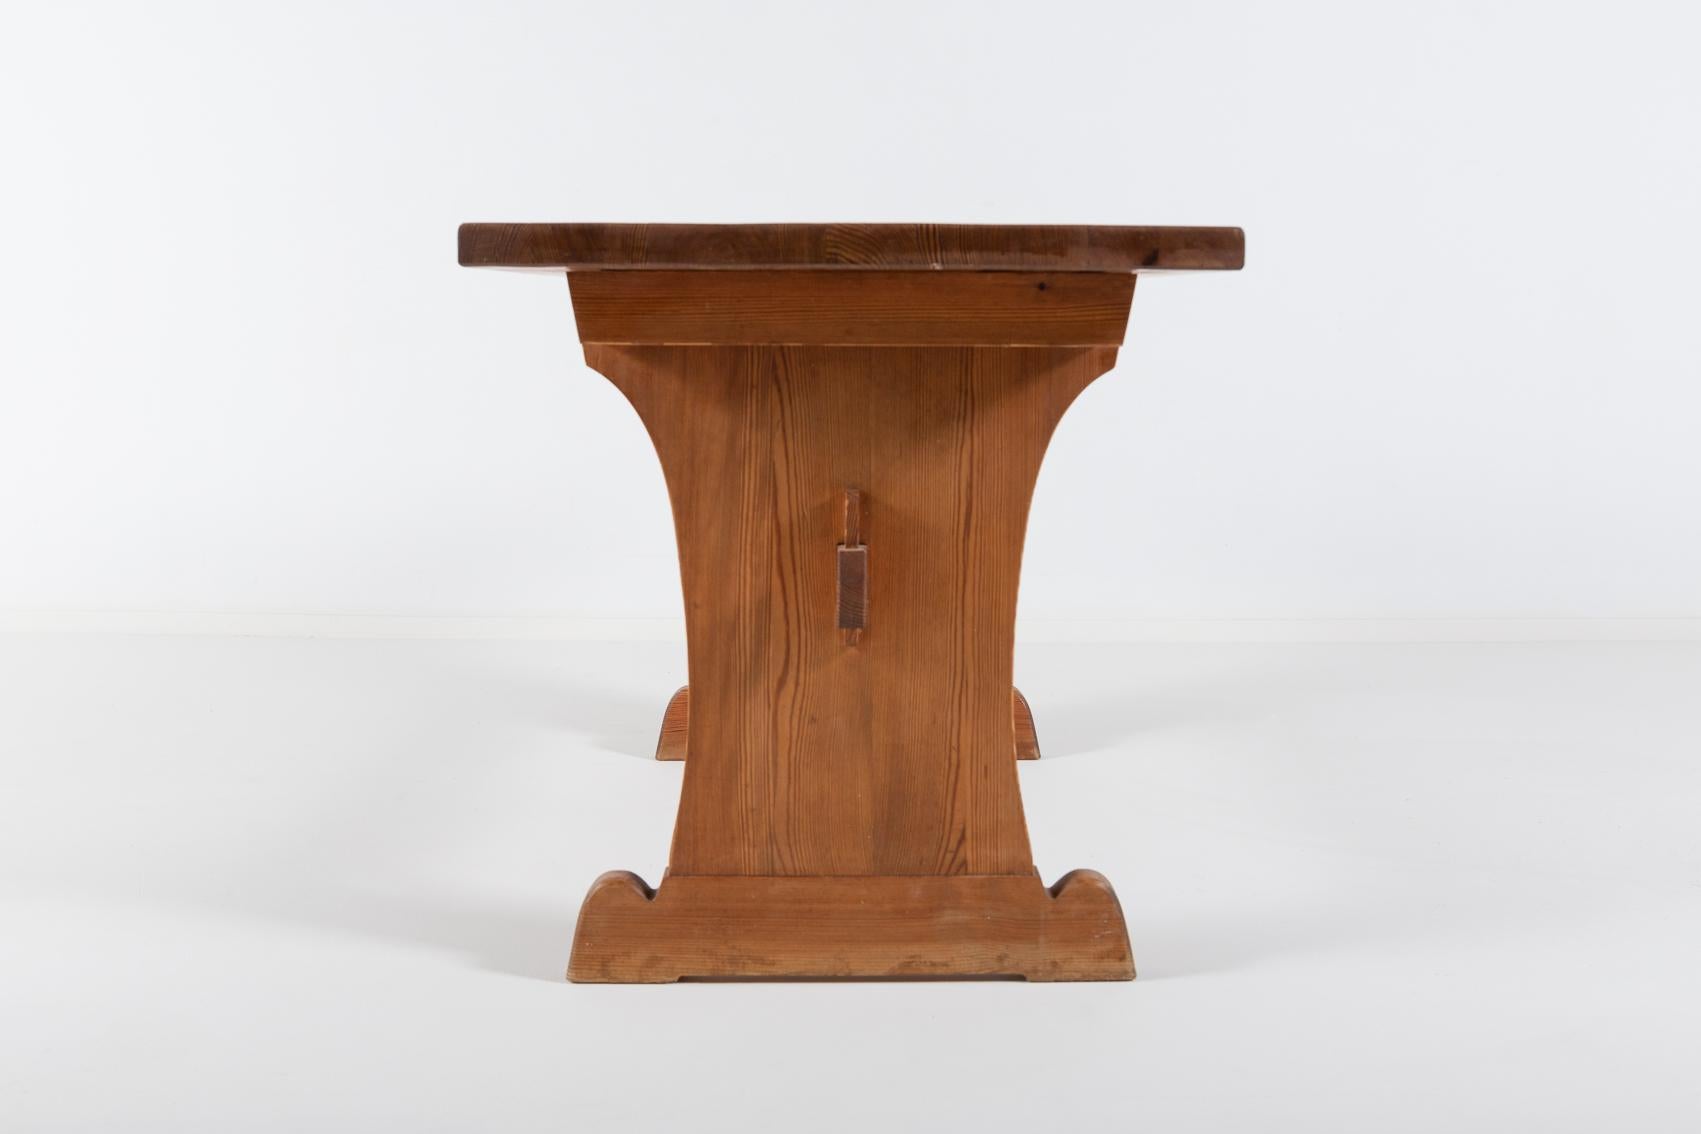 Pine Axel Einar Hjorth ‘Sport’ solid pine table by Nordiska Kompaniet For Sale